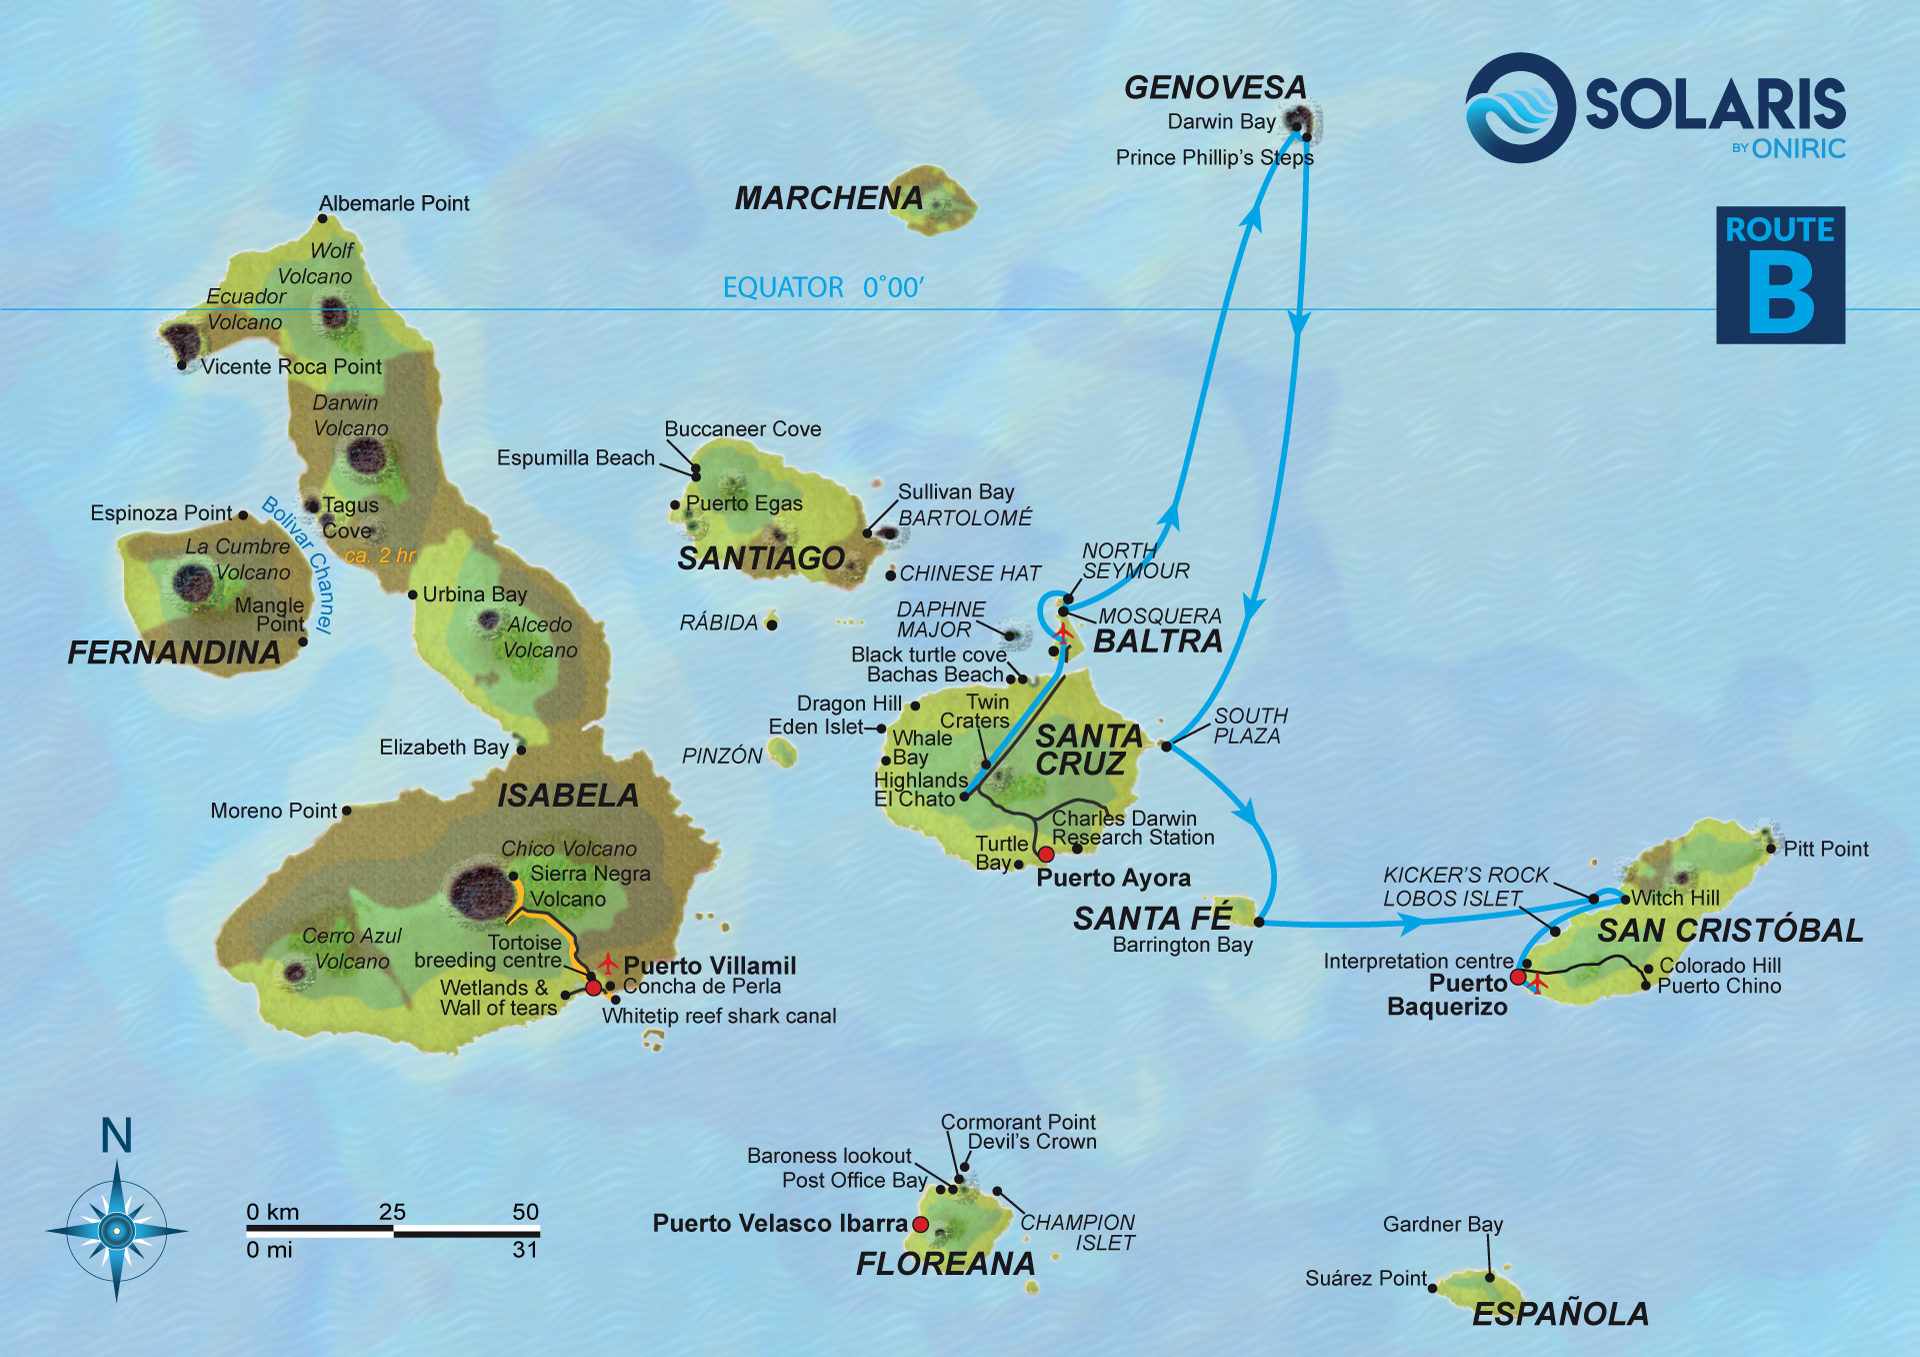 route-B-Galapagos-islands-Solaris